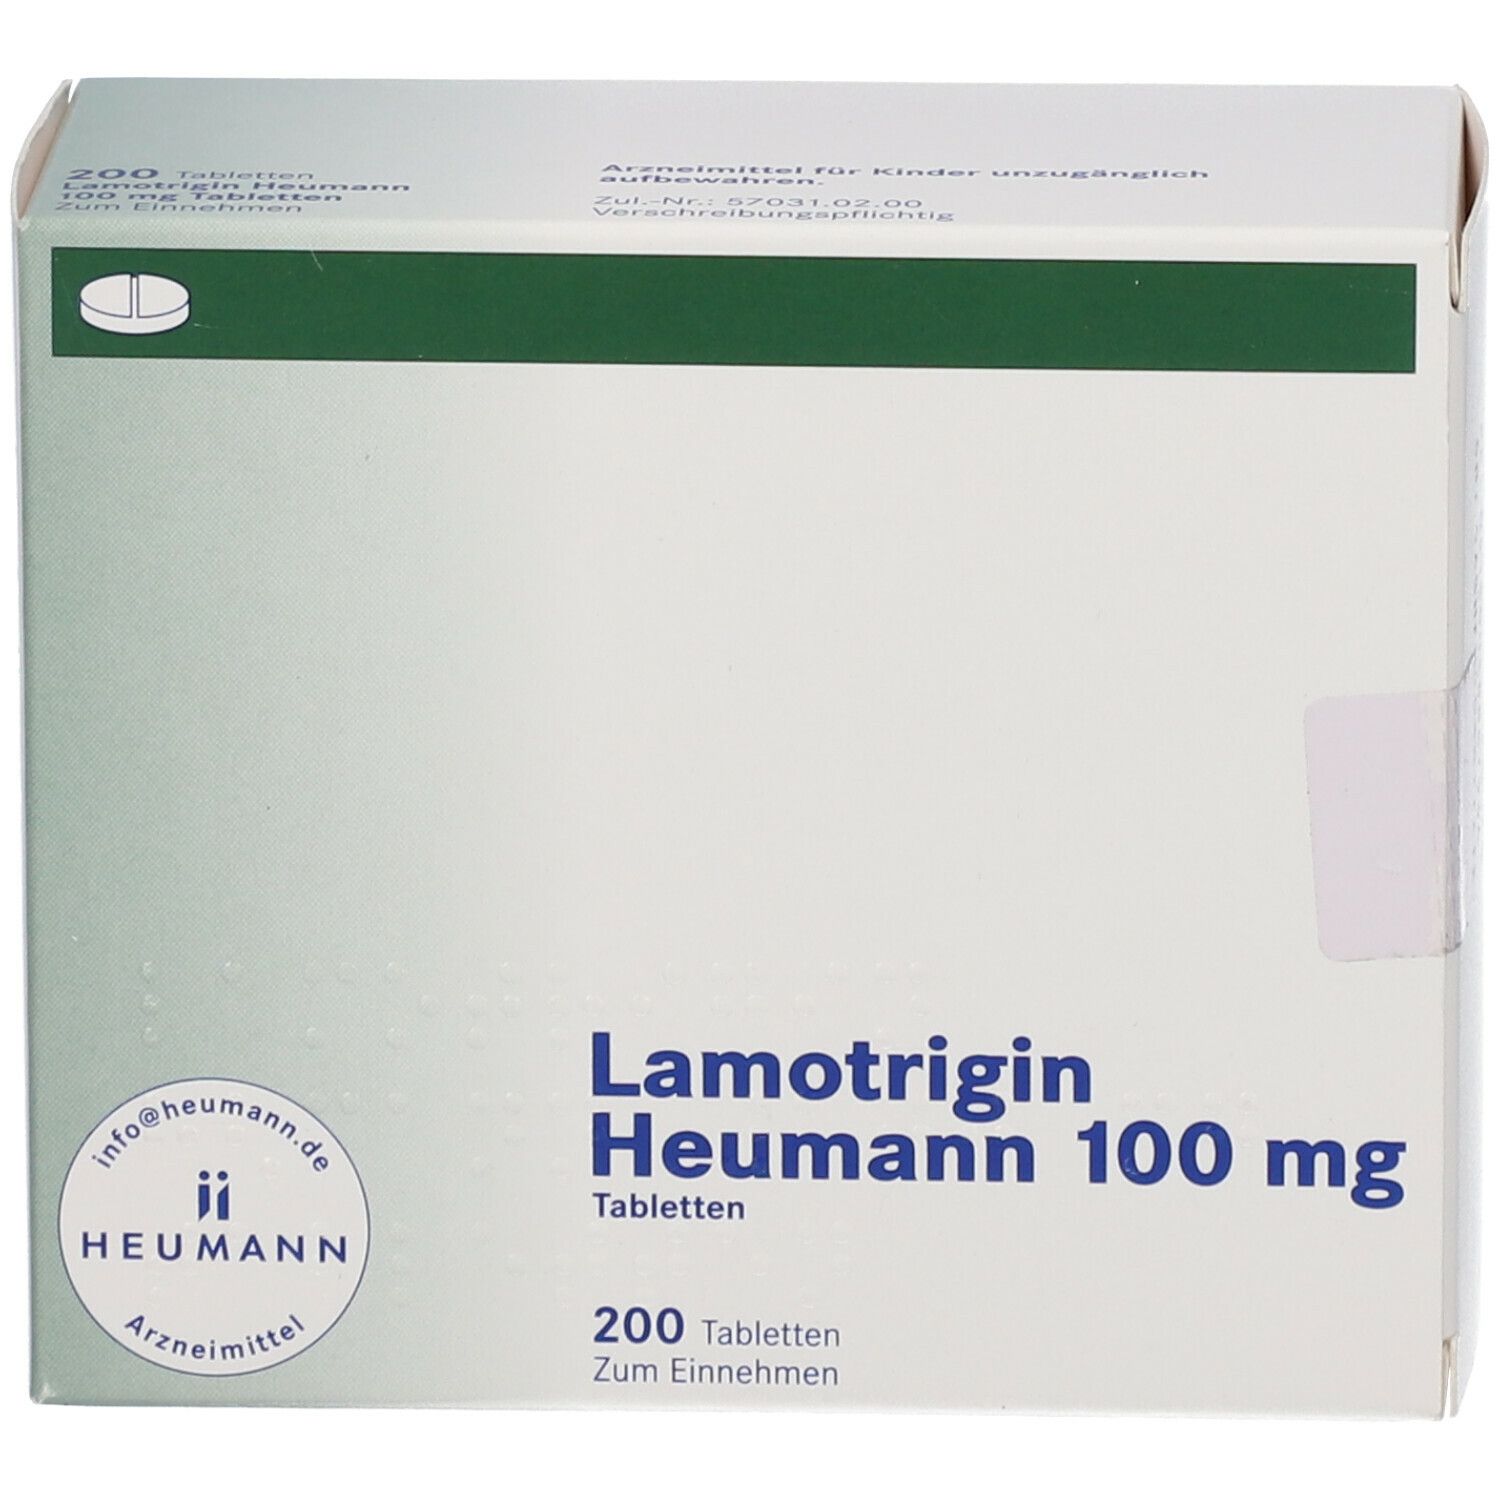 Lamotrigin Heumann 100 mg